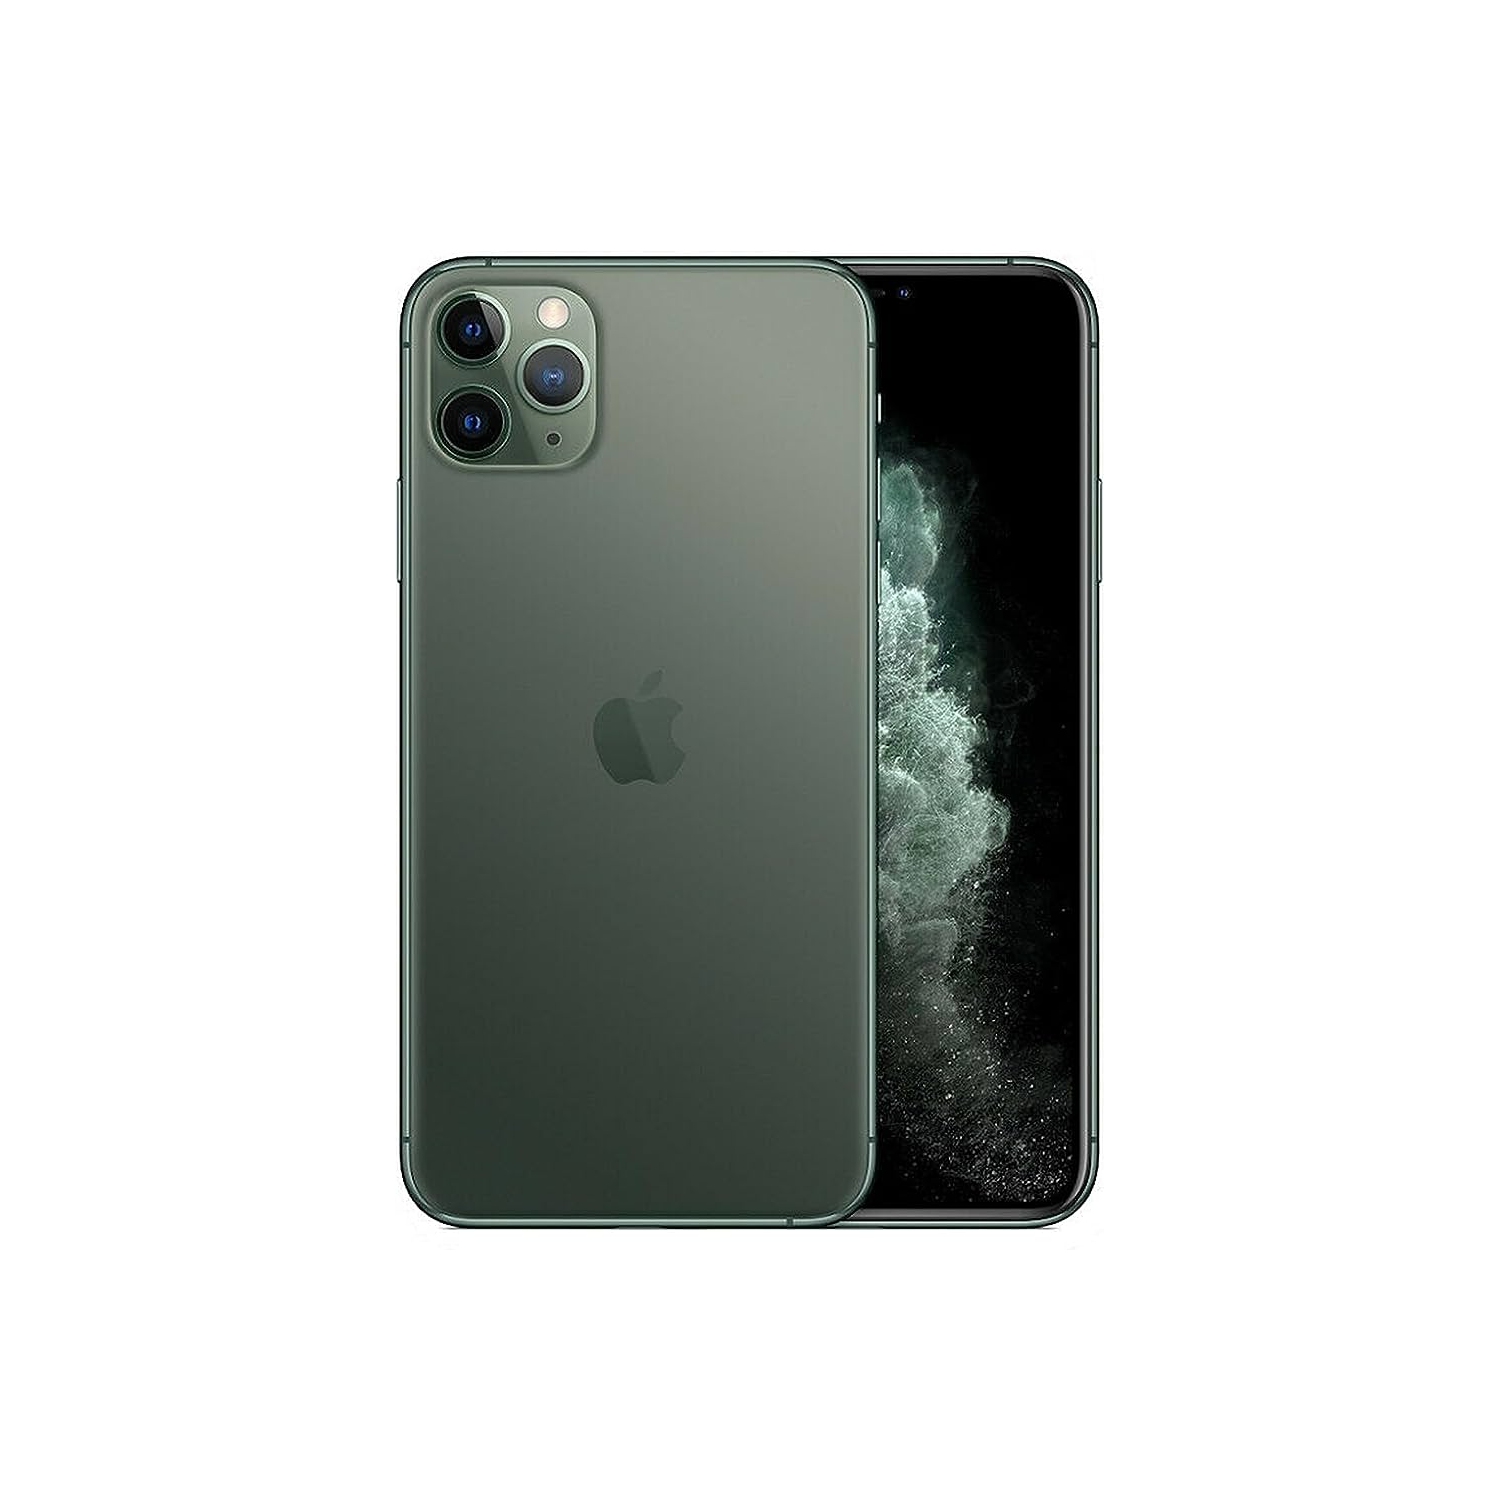 Refurbished (Excellent) - Apple iPhone 11 Pro Max 256GB Smartphone - Midnight Green - Unlocked - Certified Refurbished